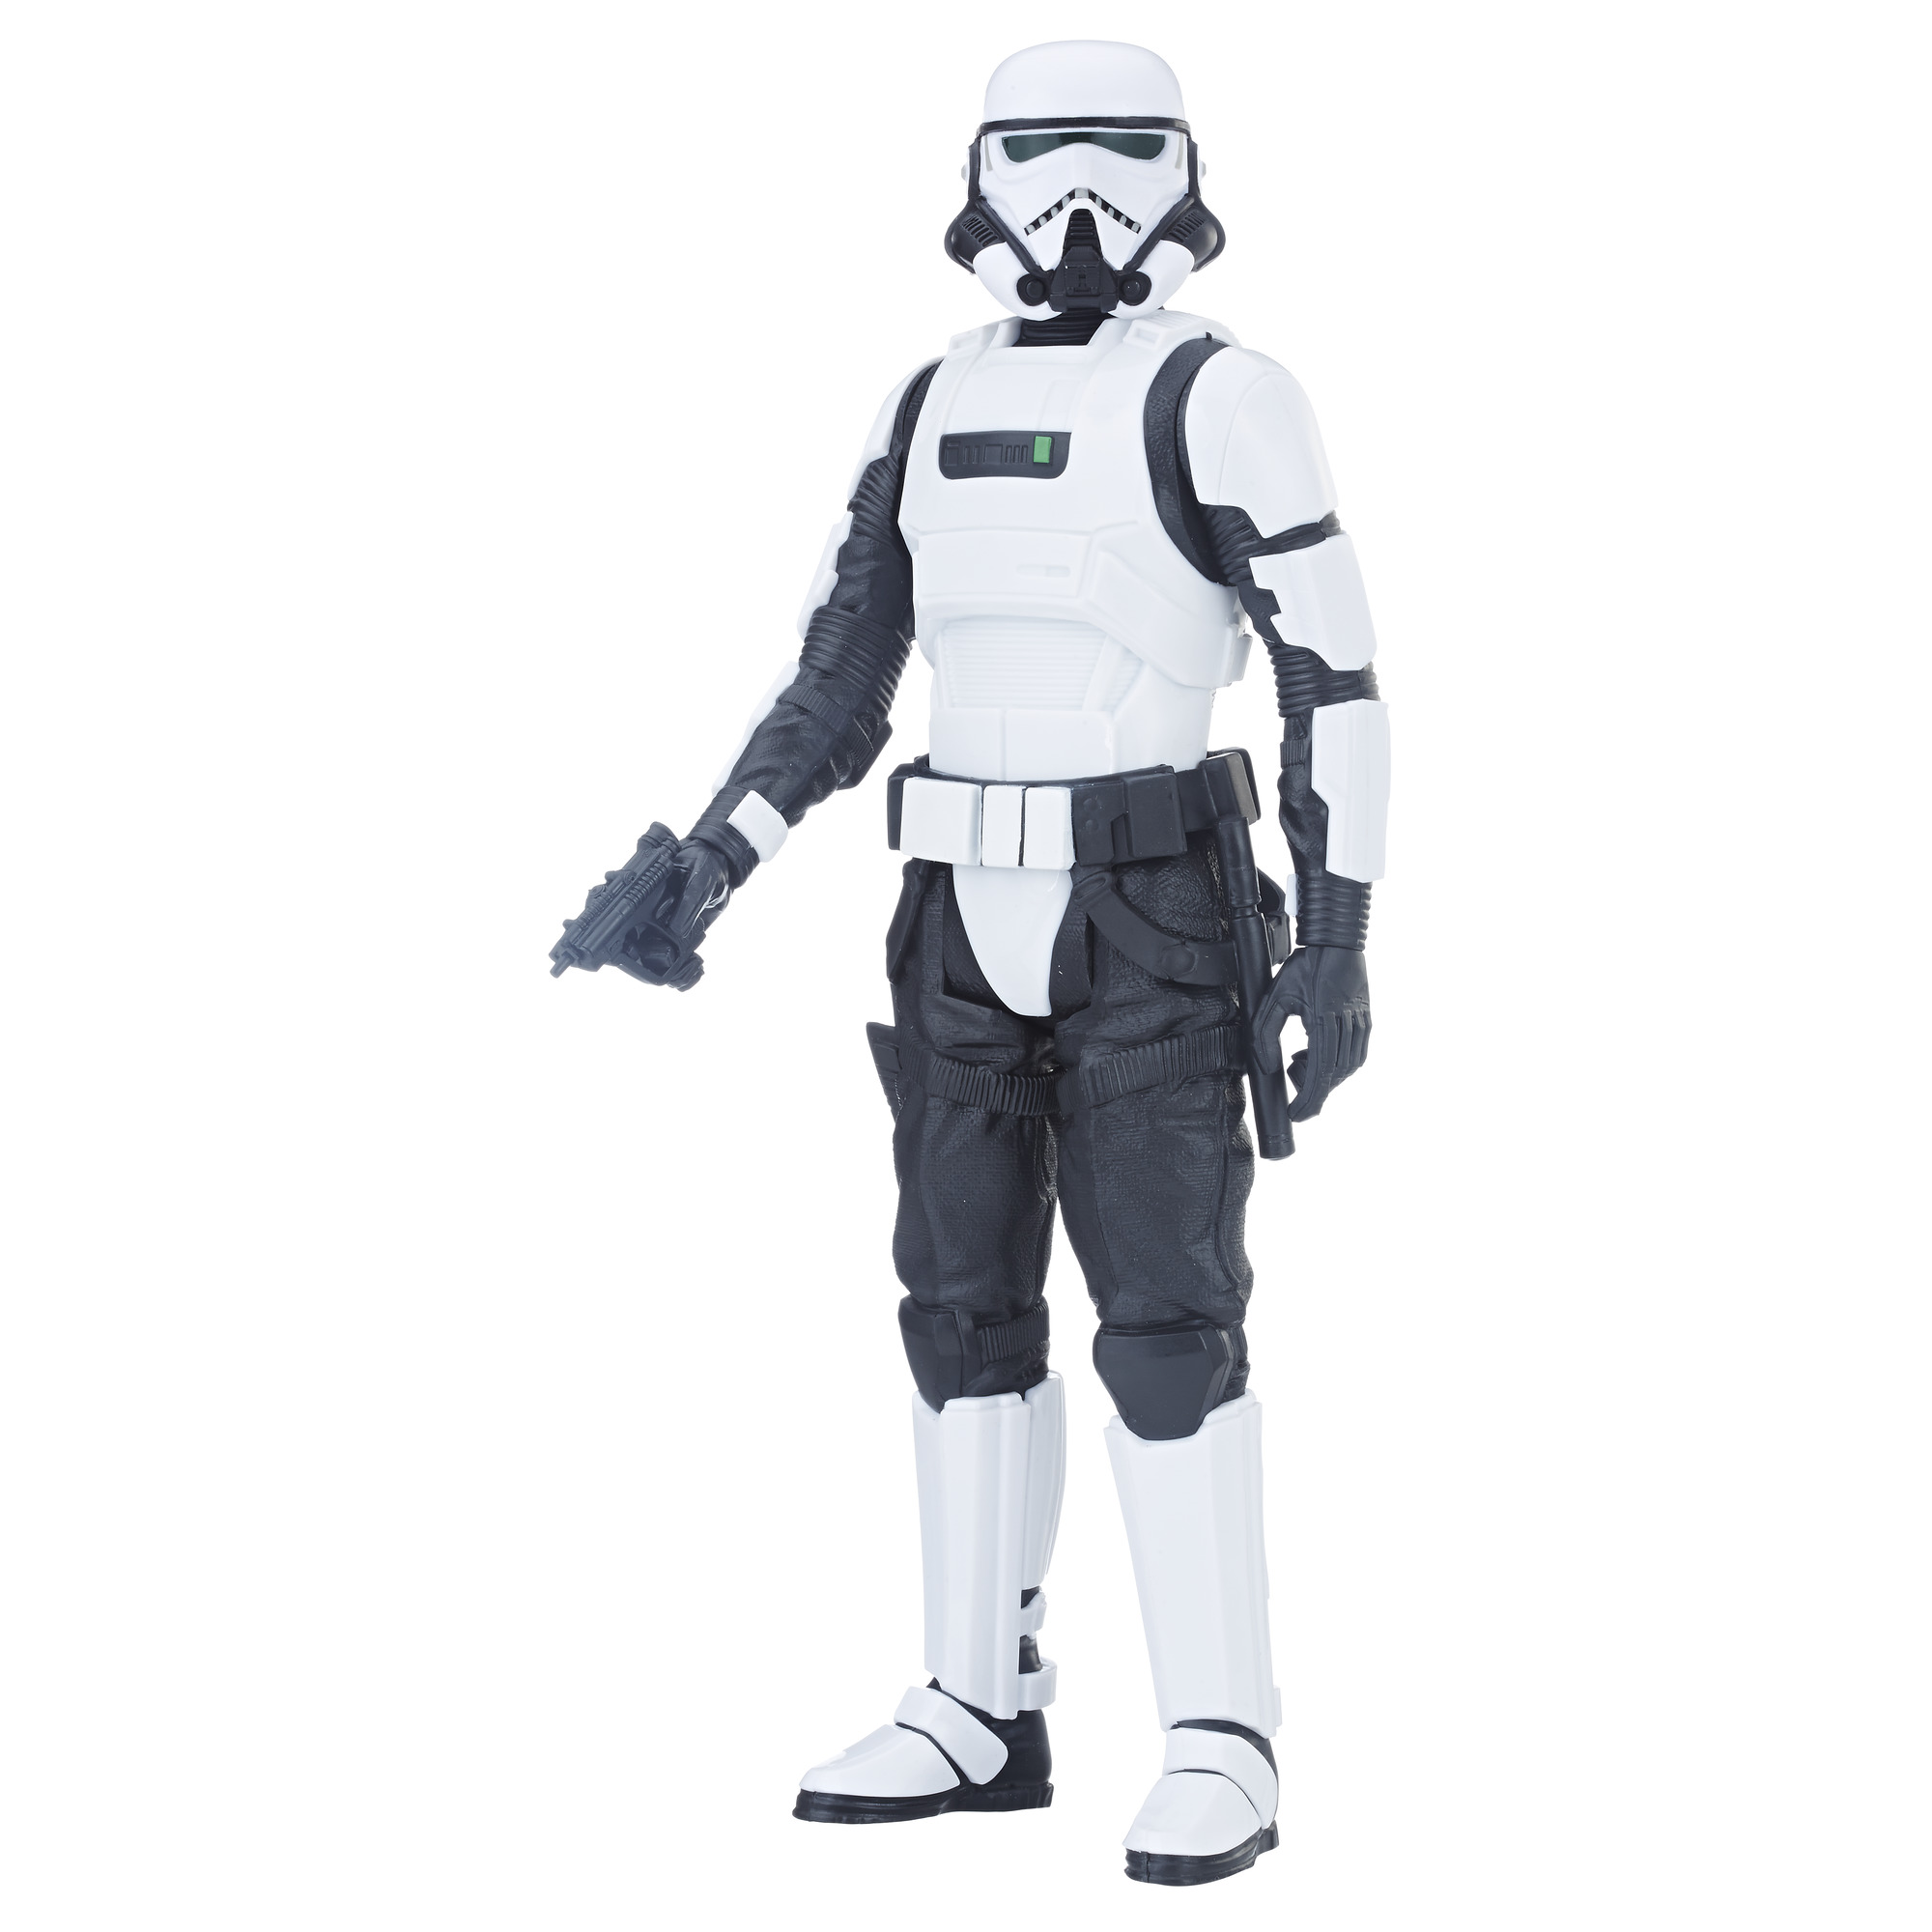 Disney Solo: A Star Wars Story 12-inch Imperial Patrol Trooper Figure